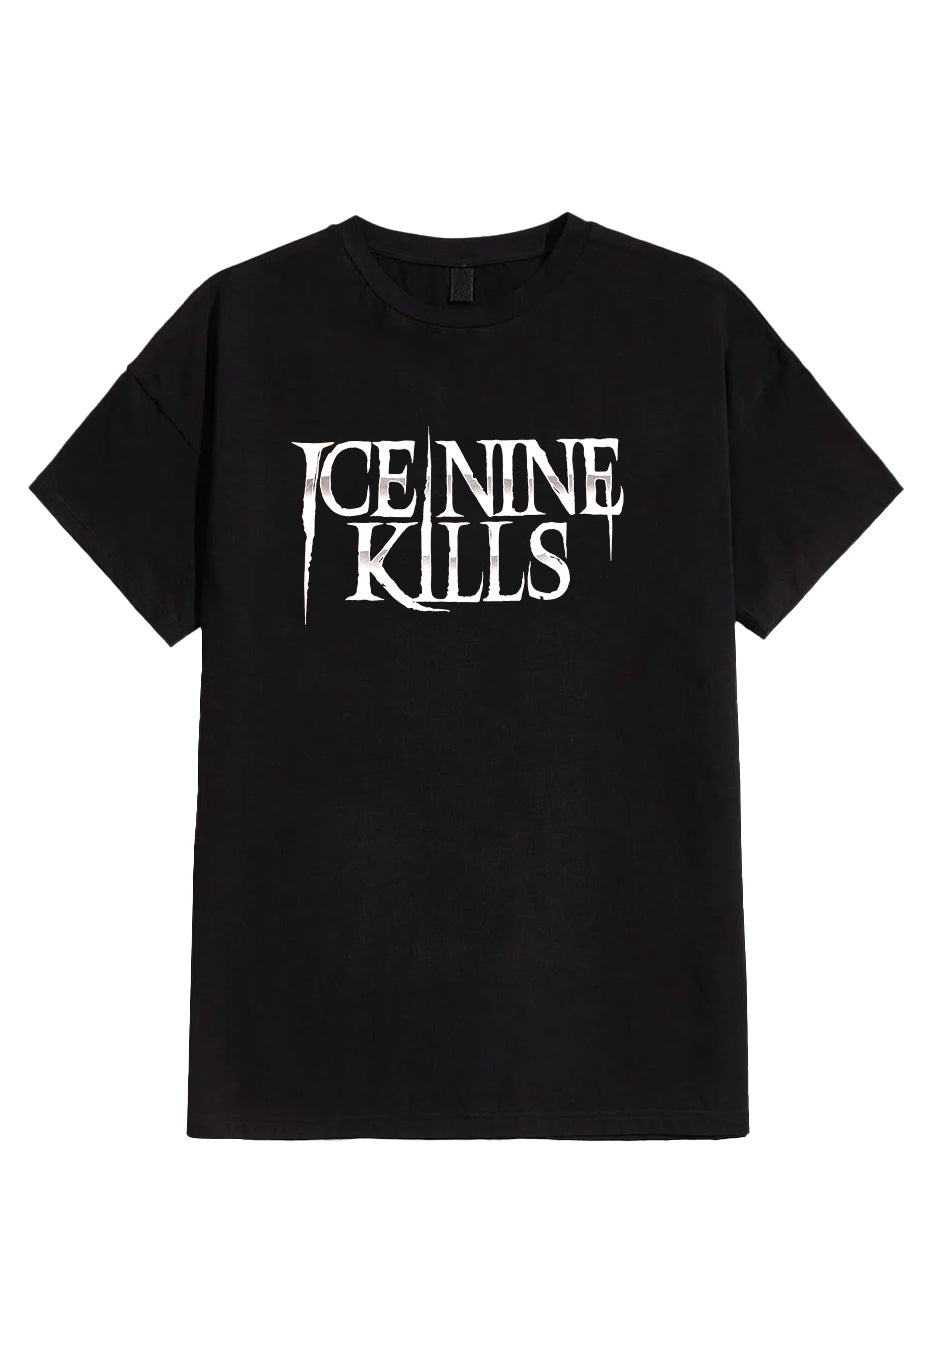 Ice Nine Kills - IX Mask - T-Shirt